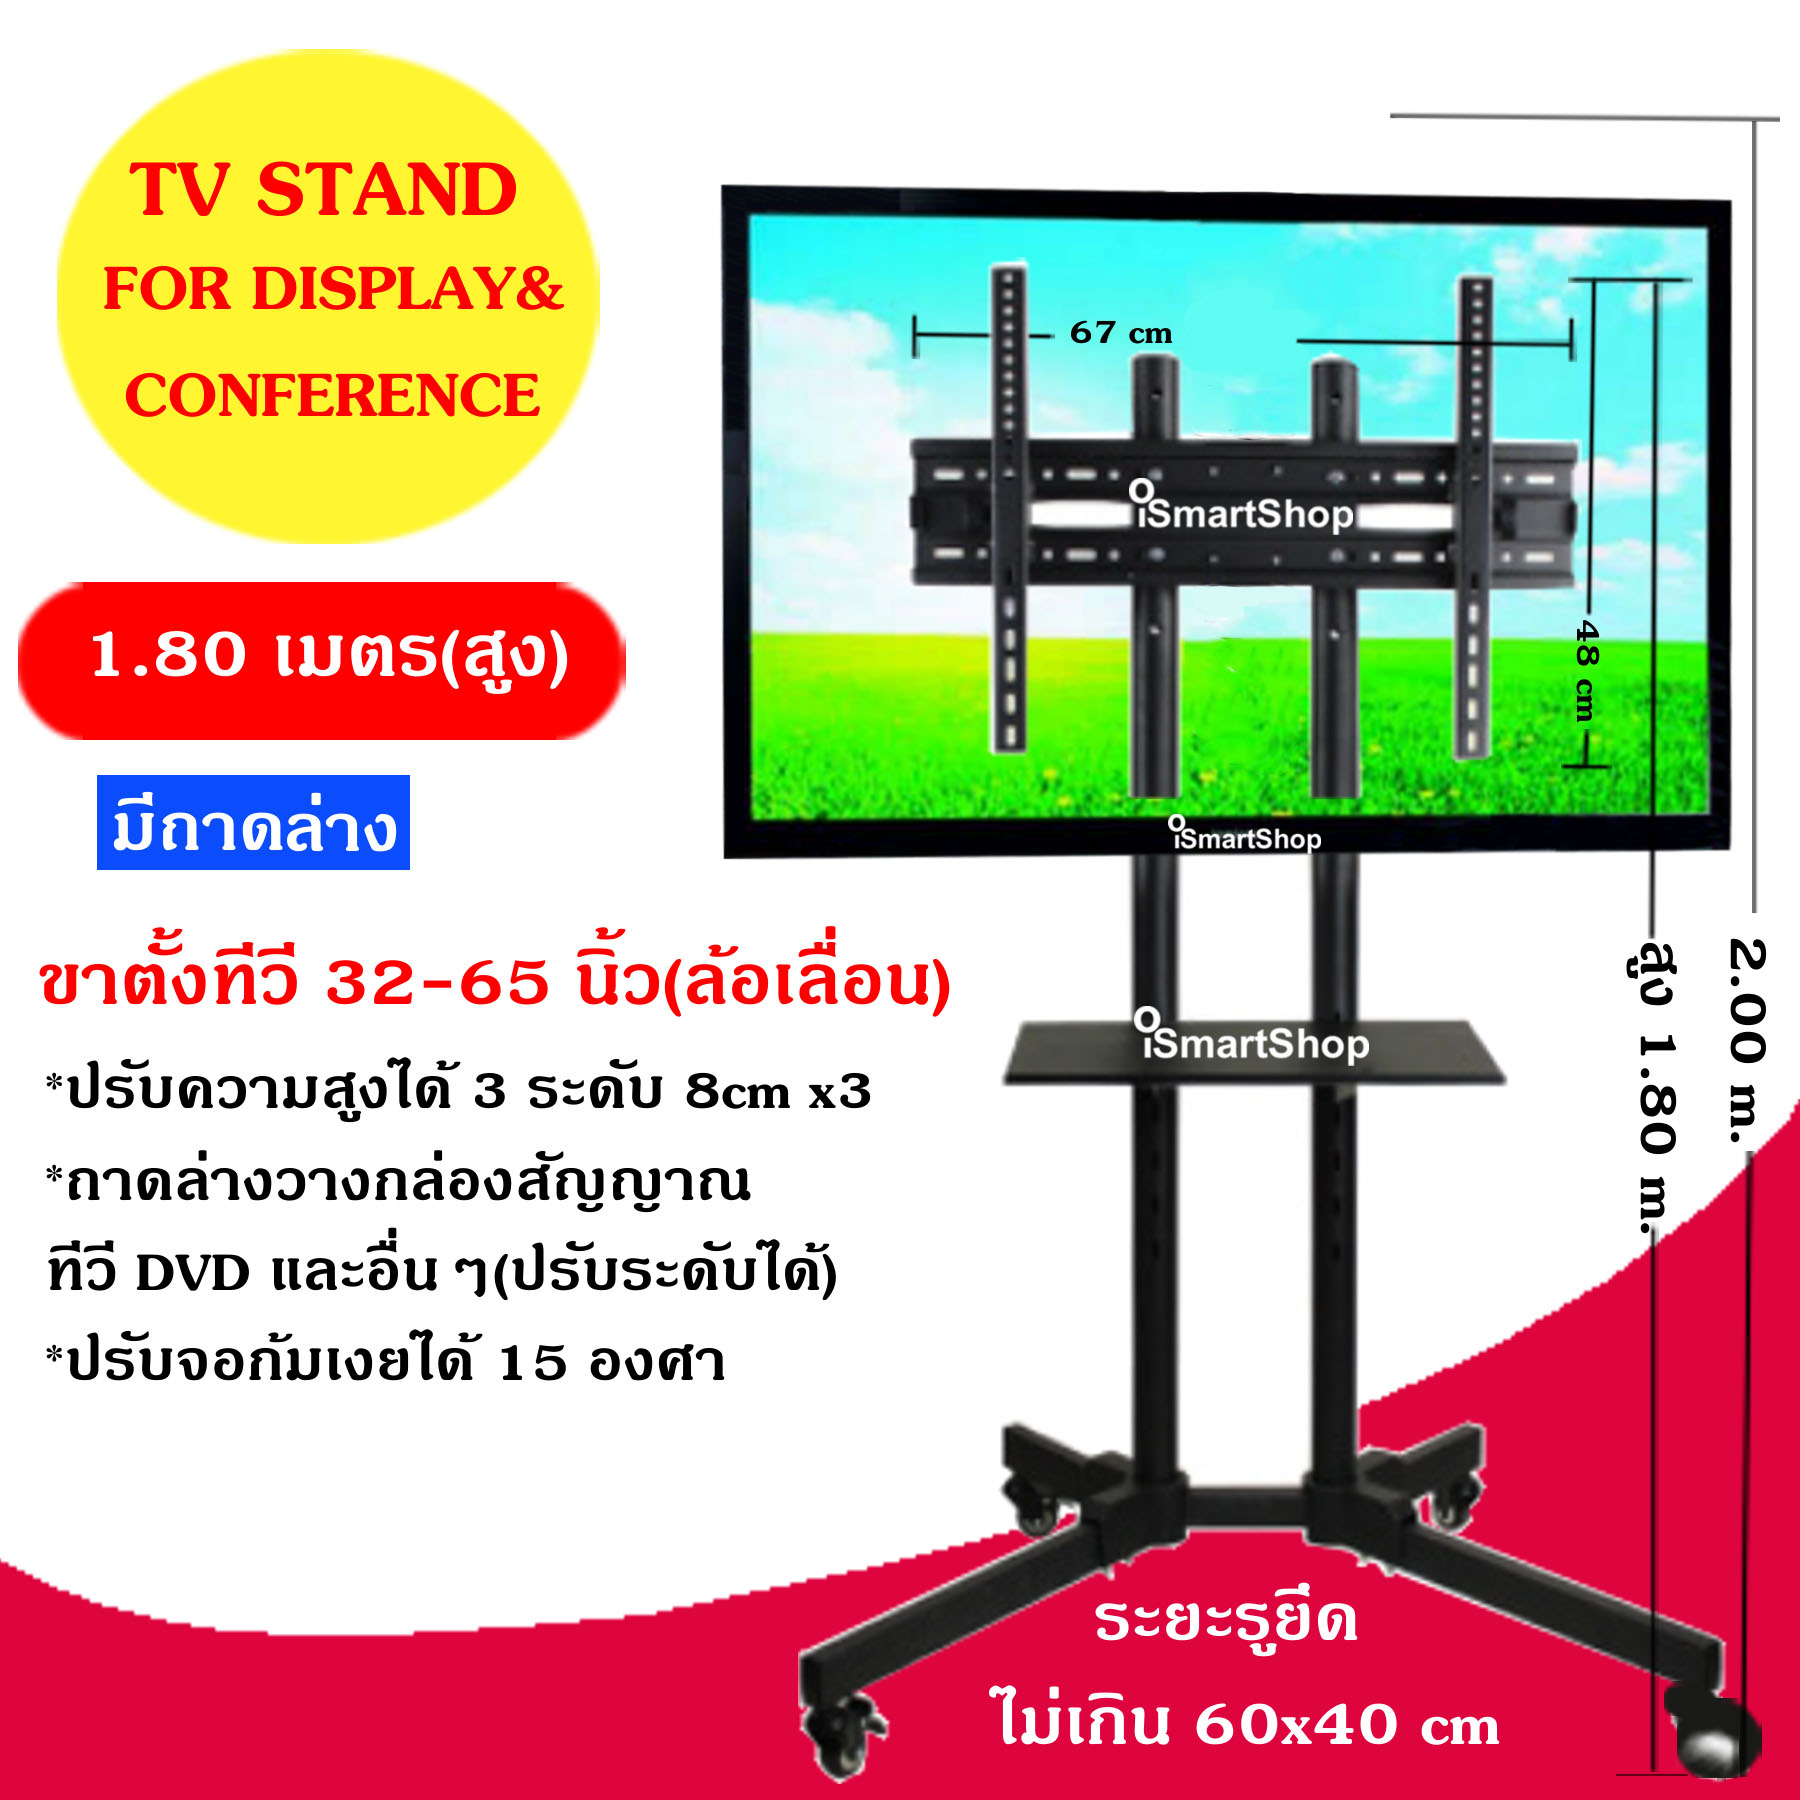 iSmartShop ขาตั้งทีวี TV Displayมีขนาด 1.1m,1.5,m 1.65m, 1.8m, 2.0m. เมตร ชนิดล้อเลื่อน(ล็อคล้อได้) ปรับระดับได้ 3 ระดับ ระดับละ 8 cm. สำหรับการโฆษณา ประชุม สาธิต